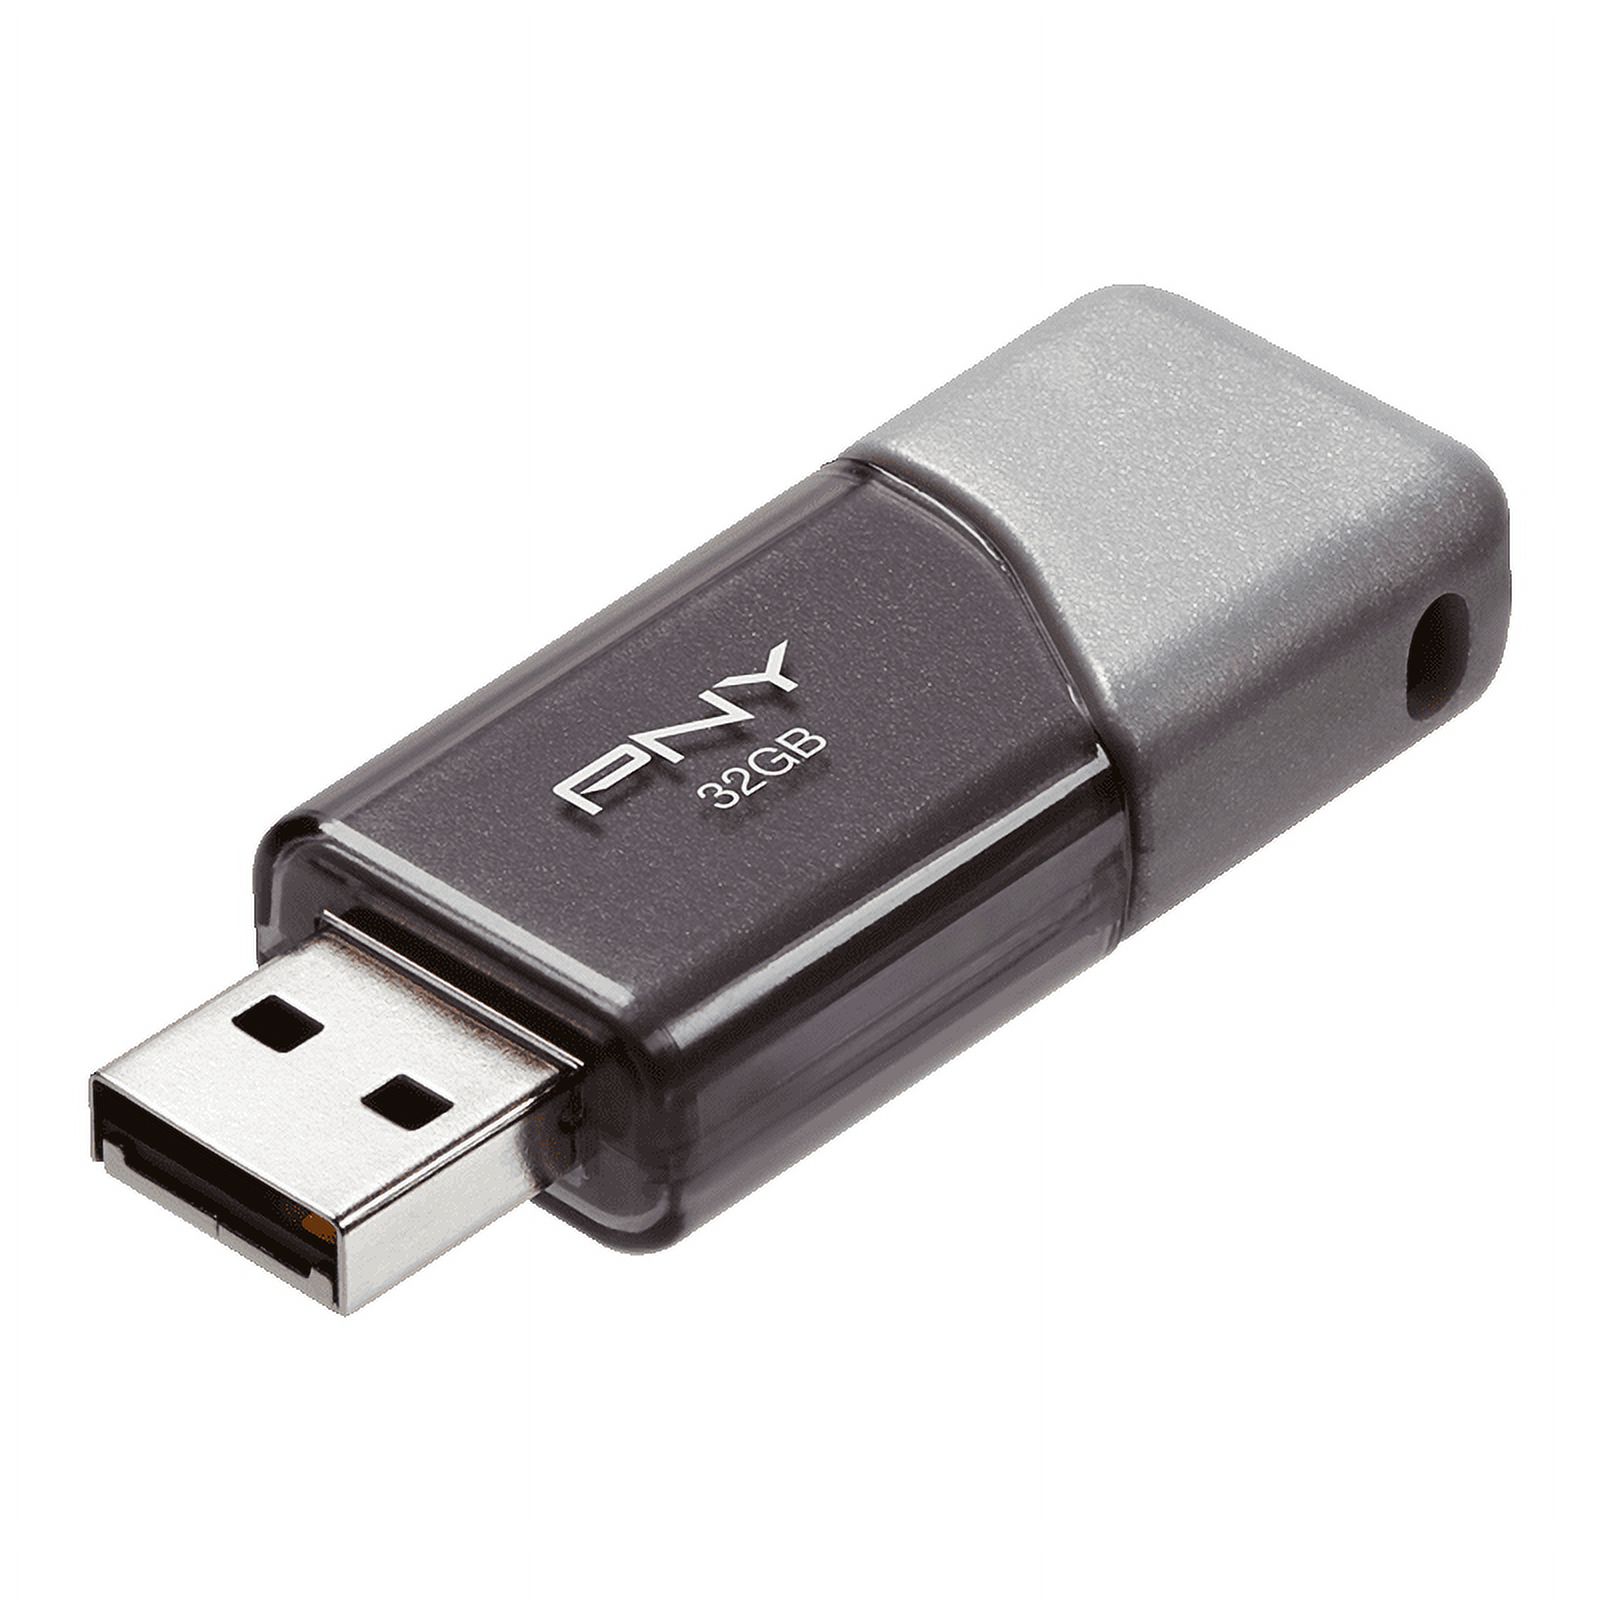 PNY Elite Turbo Attache 3 32GB Turbo USB 3.0 Flash Drive - image 3 of 6